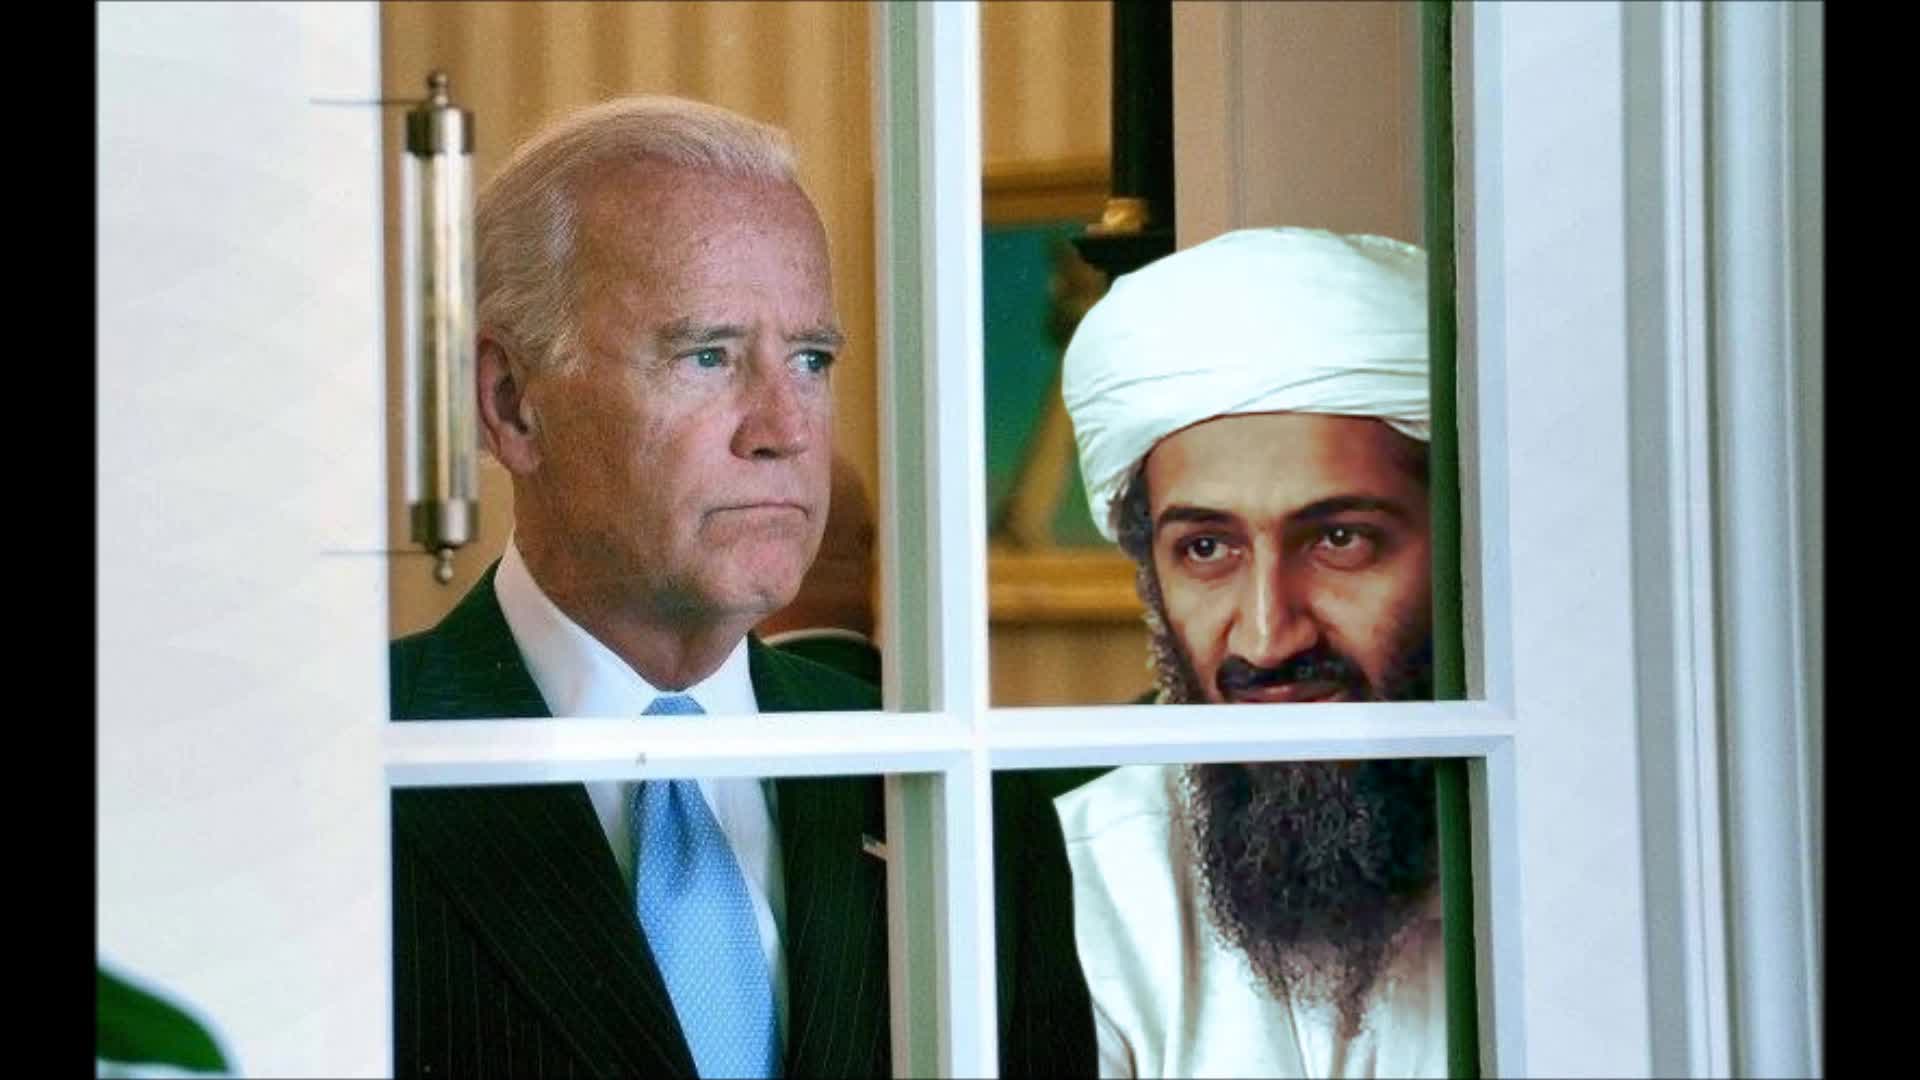 Biden and Bin Laden - Looking Out the Window